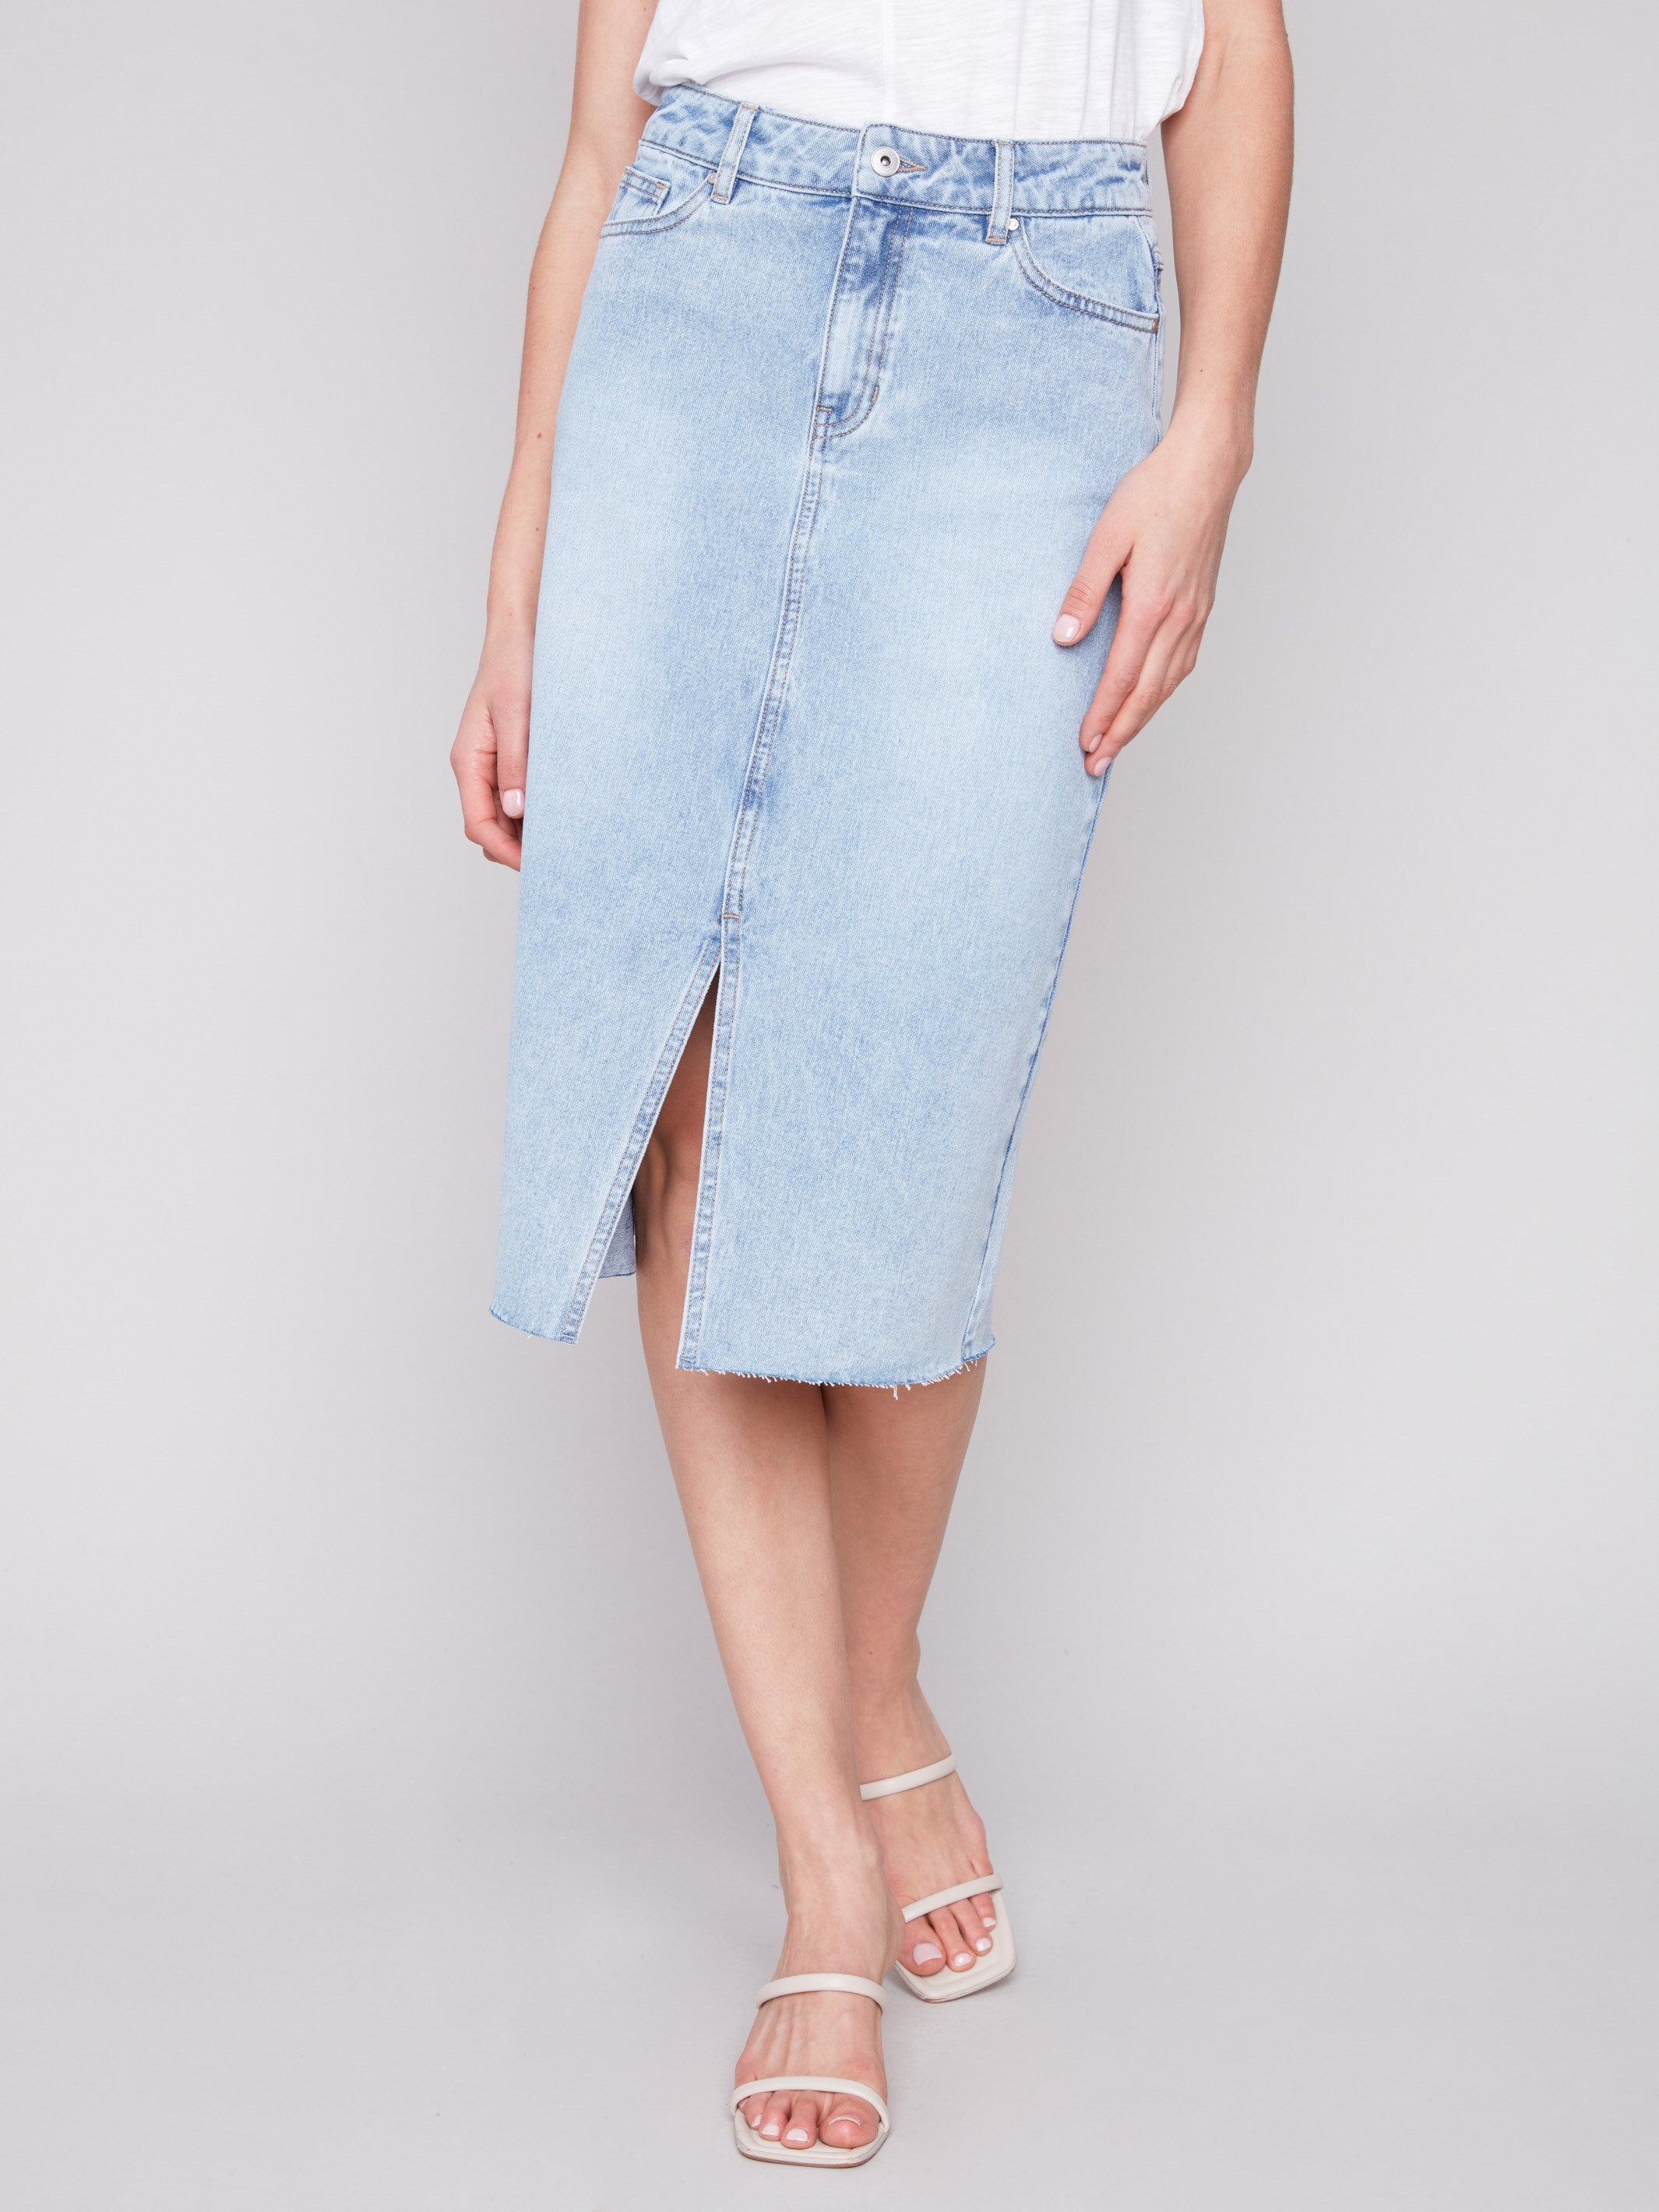 Denim Midi Skirt with Frayed Hem - Light Blue - Charlie B Collection Canada - Image 3